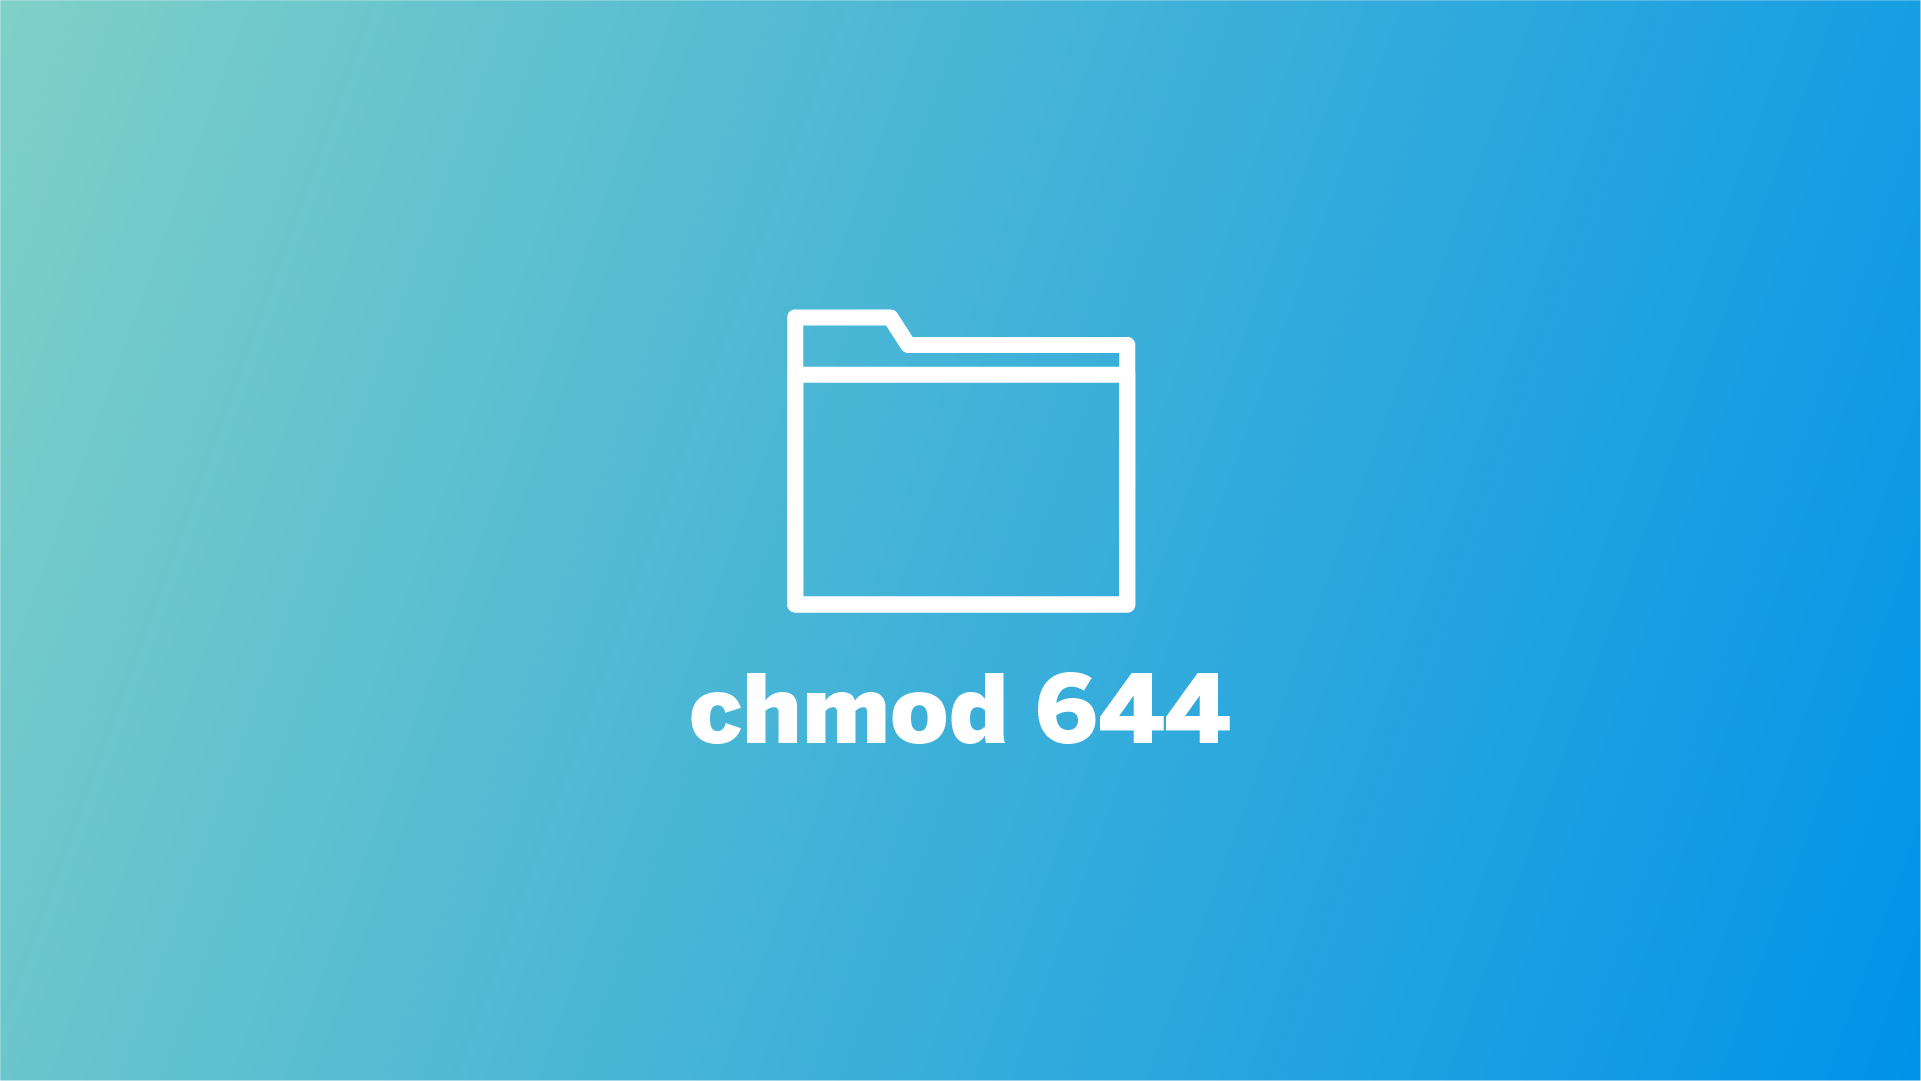 chmod 644 command